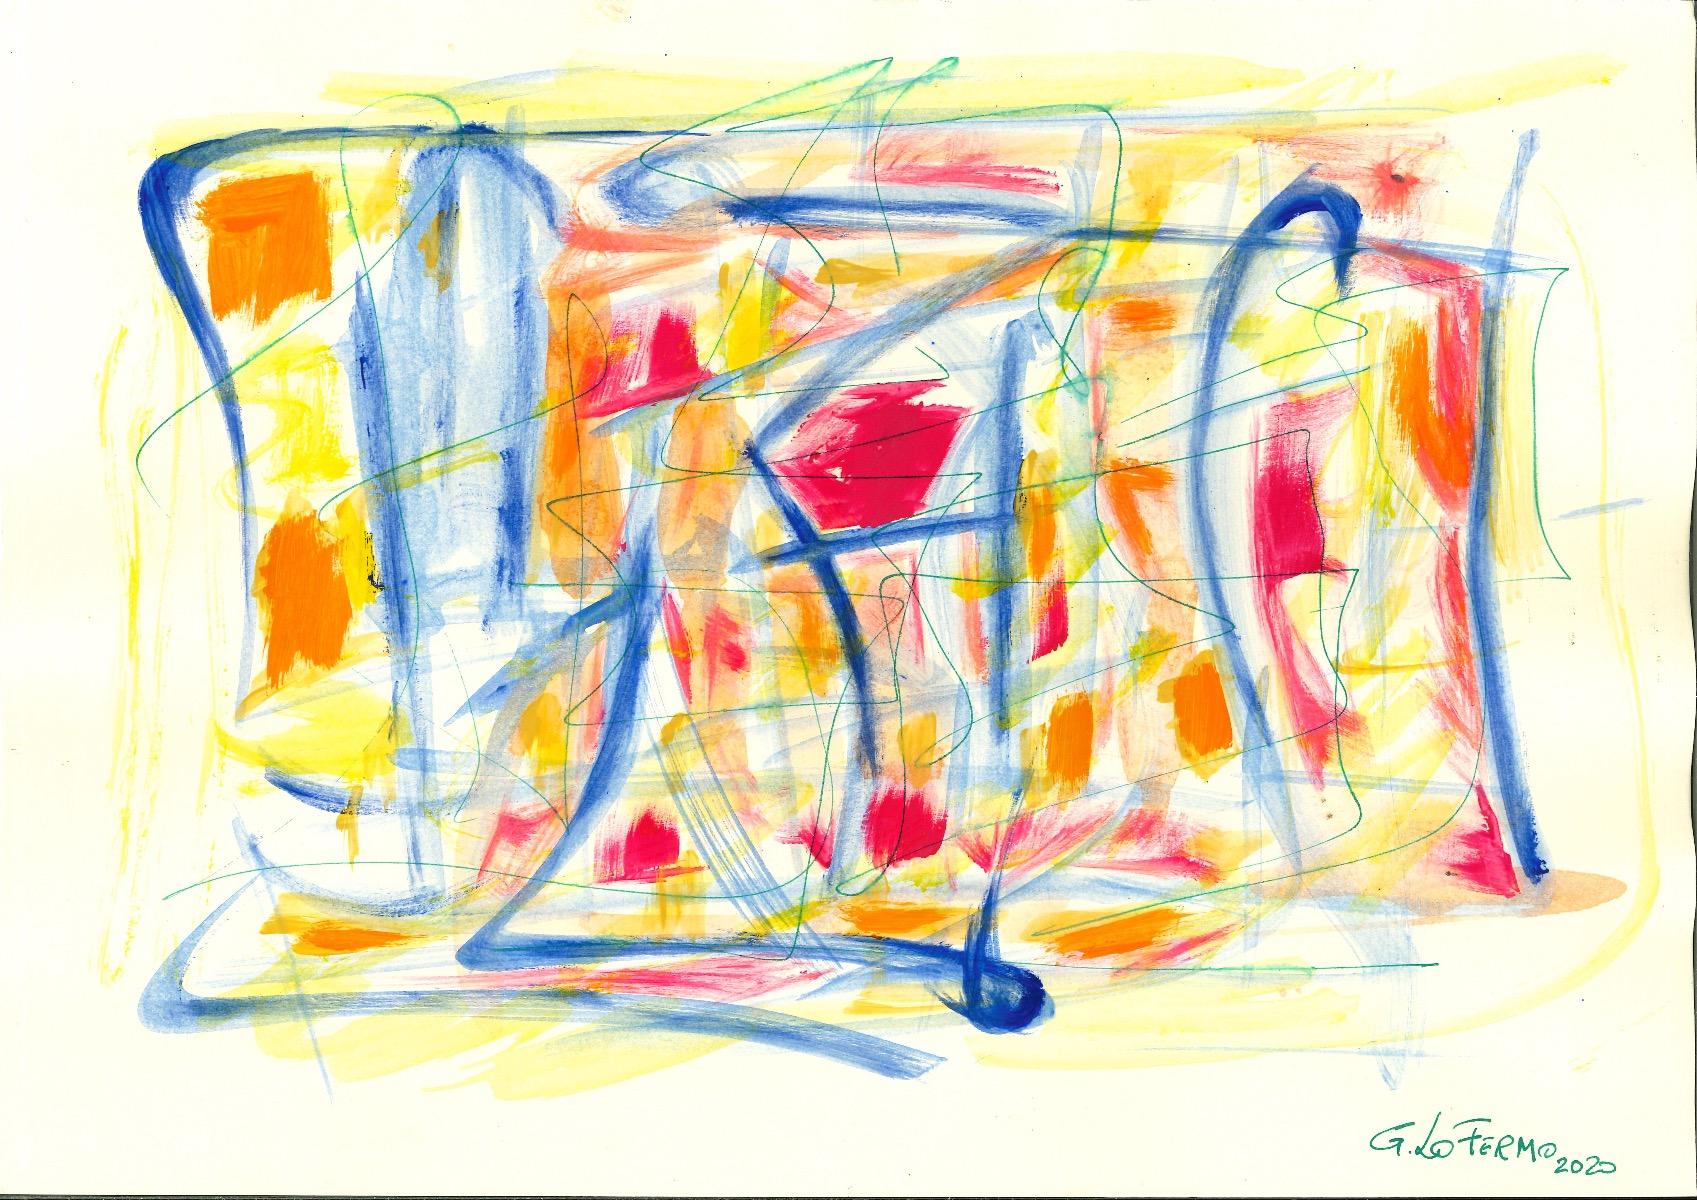 Composition colorée - Tempera et aquarelle de Giorgio Lo Fermo - 2020